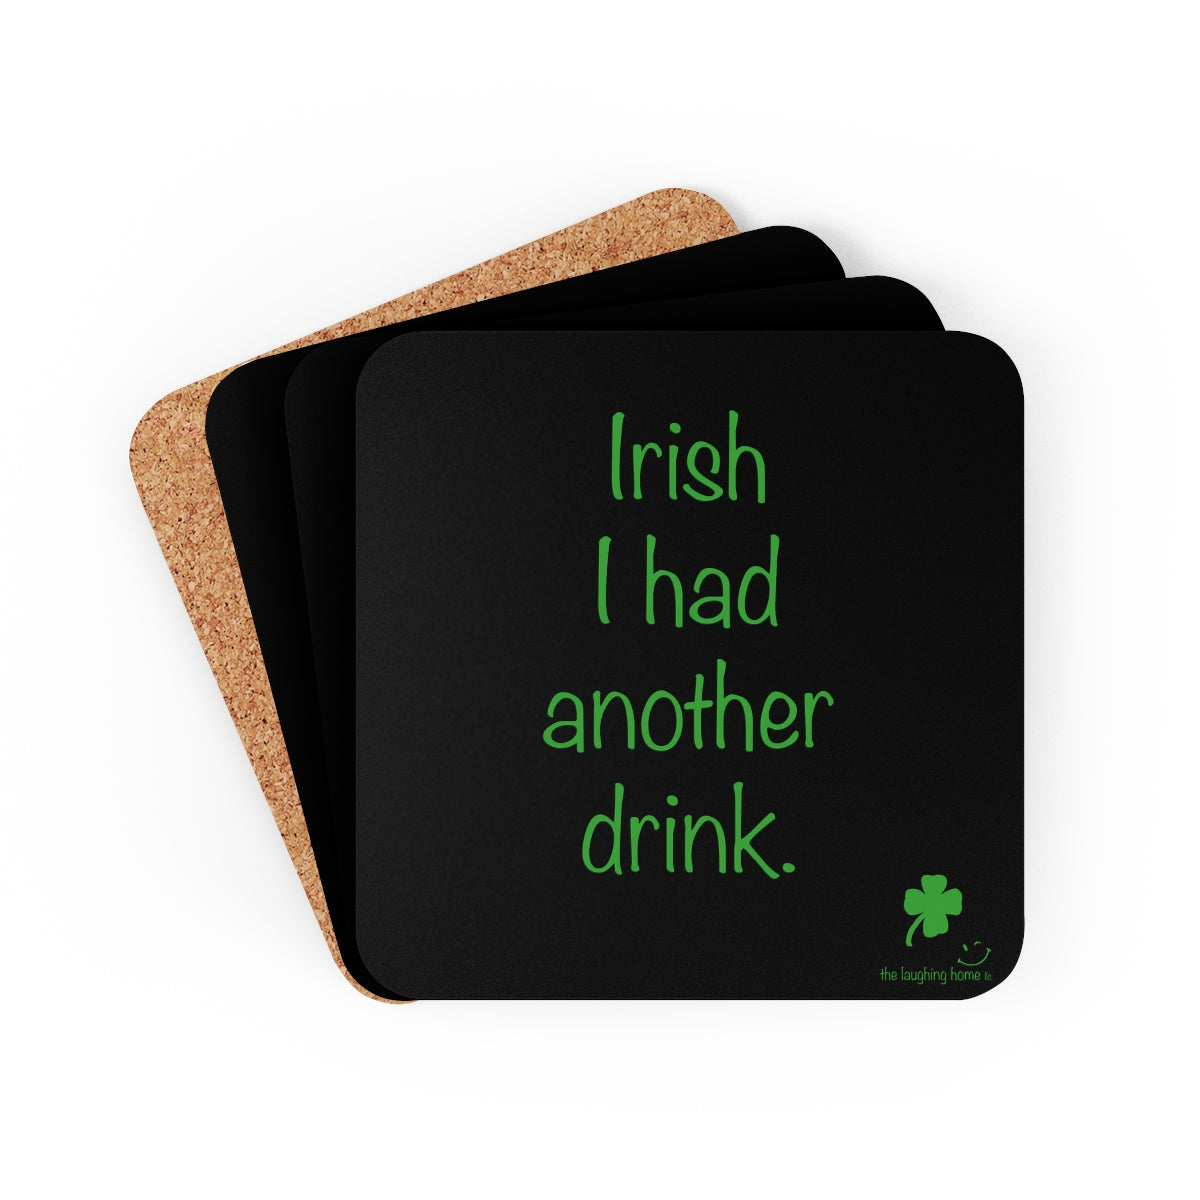 Irish I had another drink Corkwood Coaster Set of 4